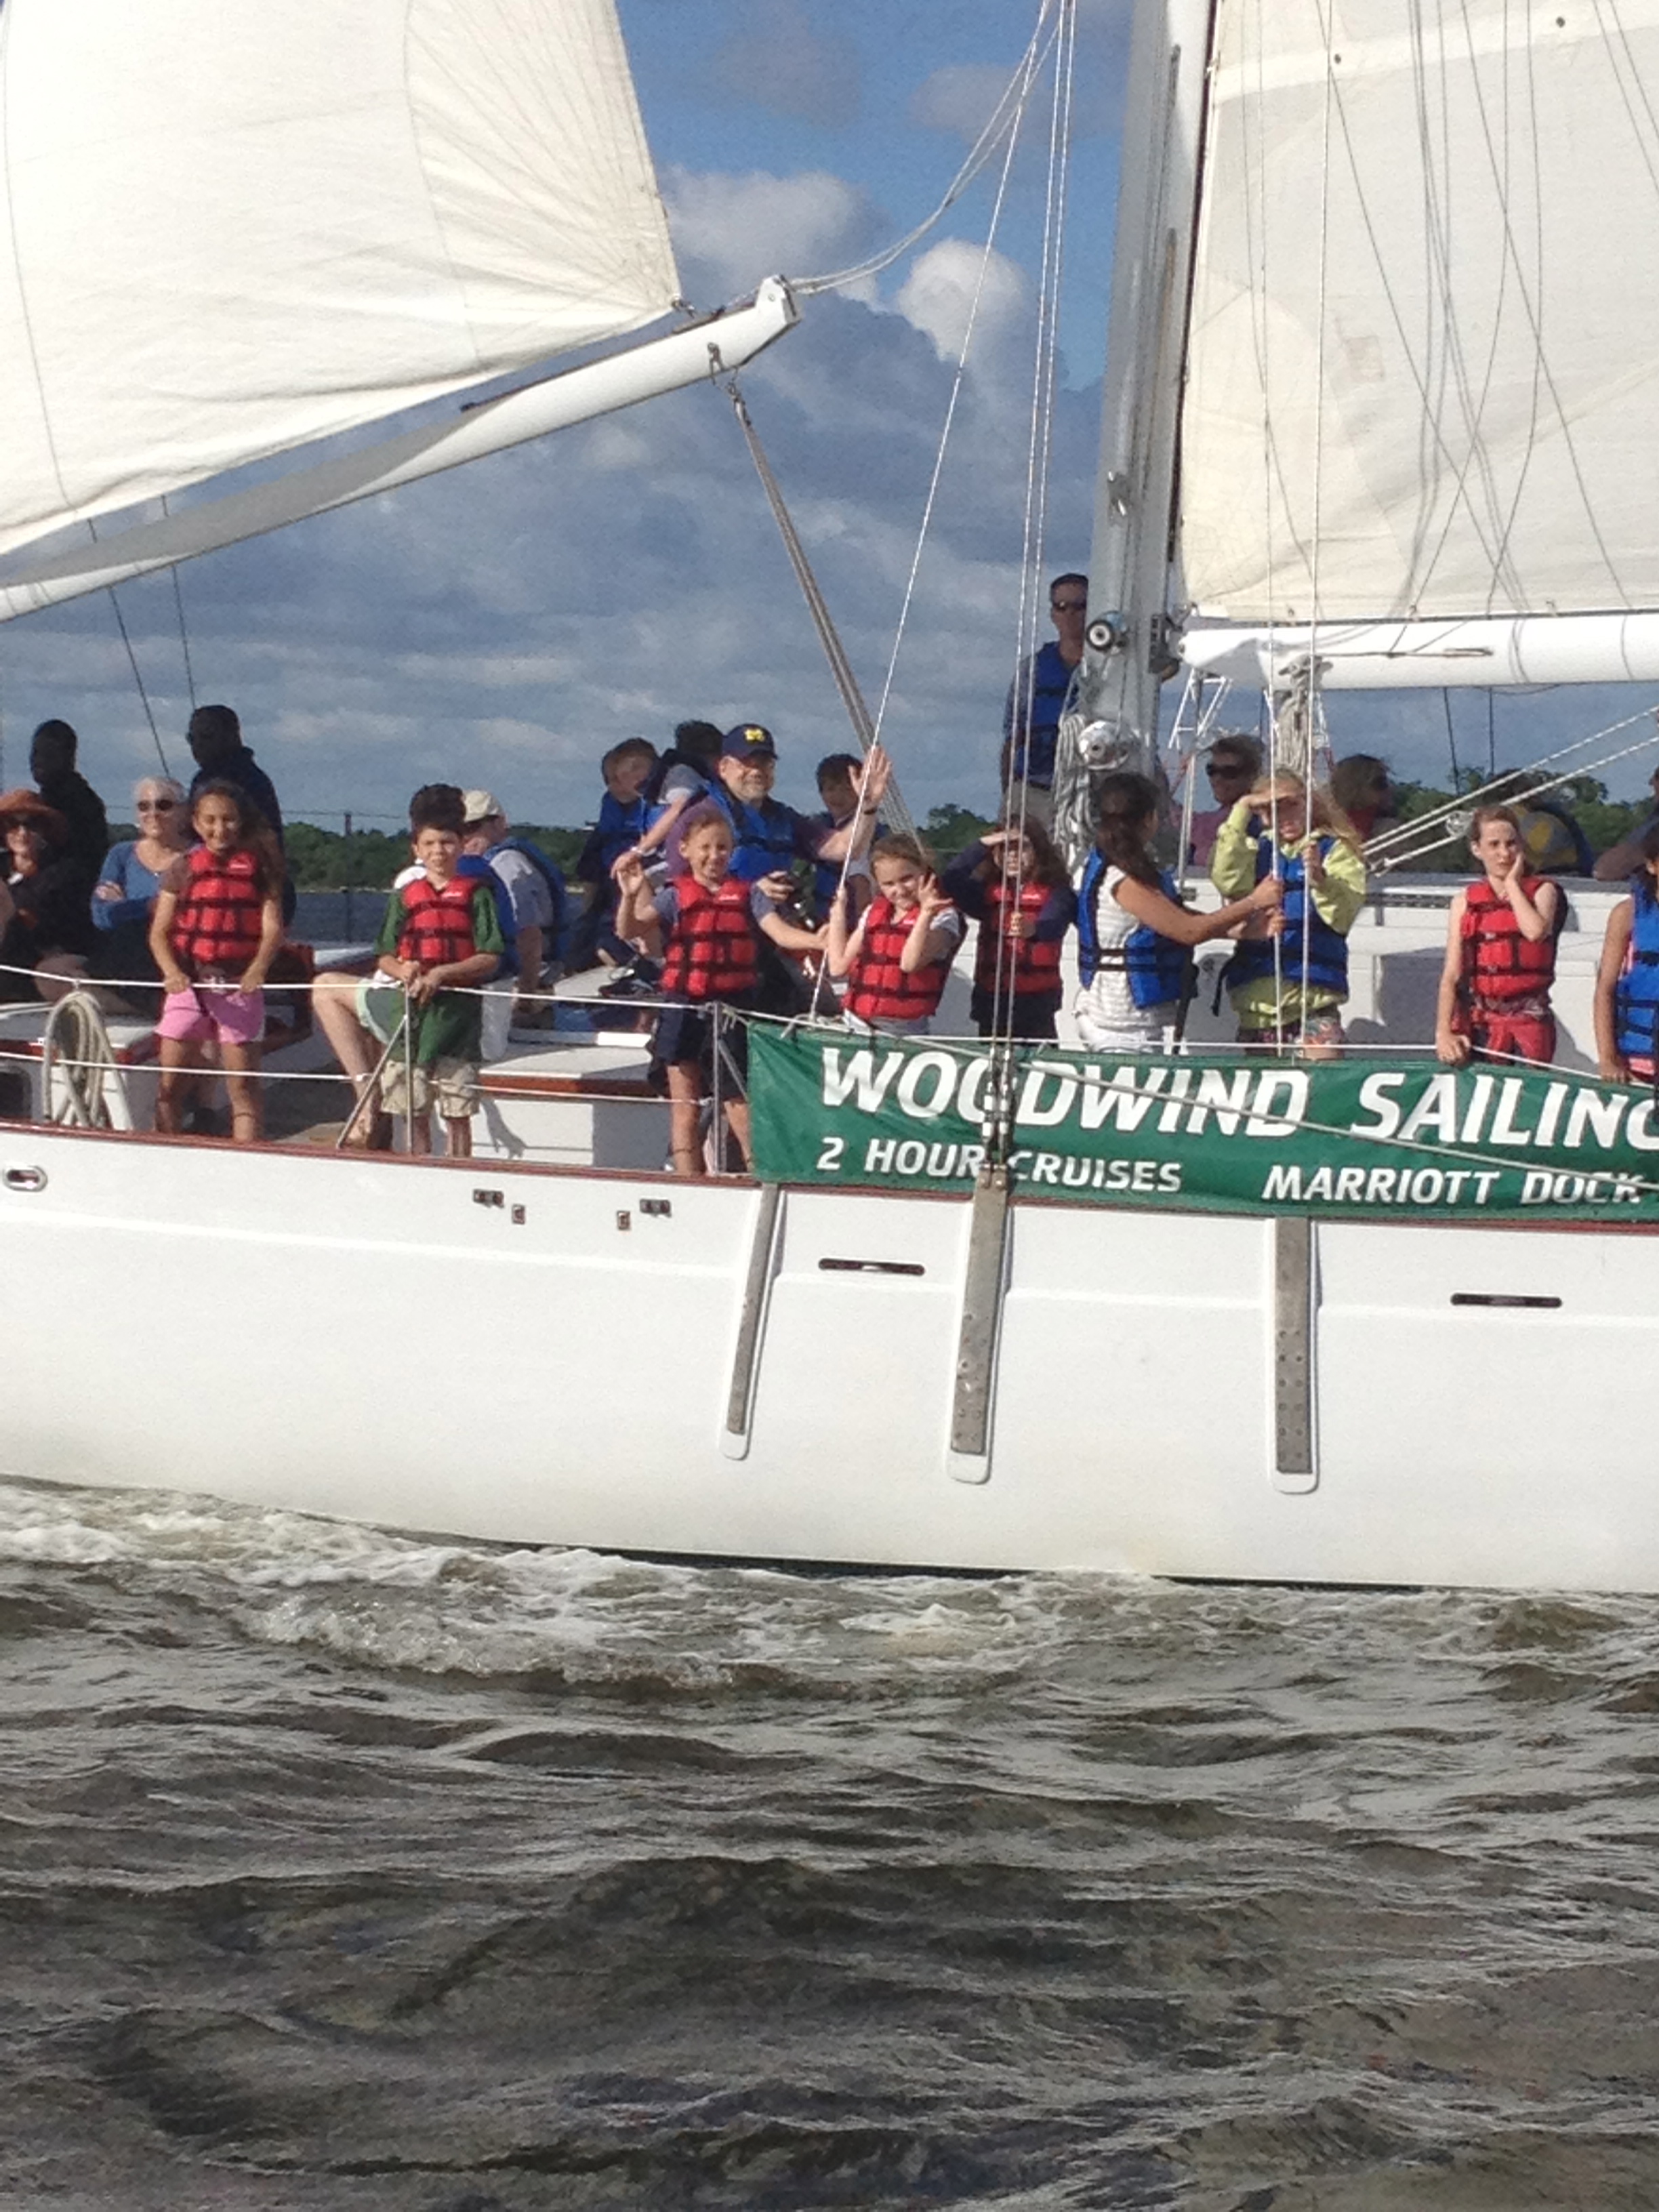 Children waving from the schooner that is breezing along